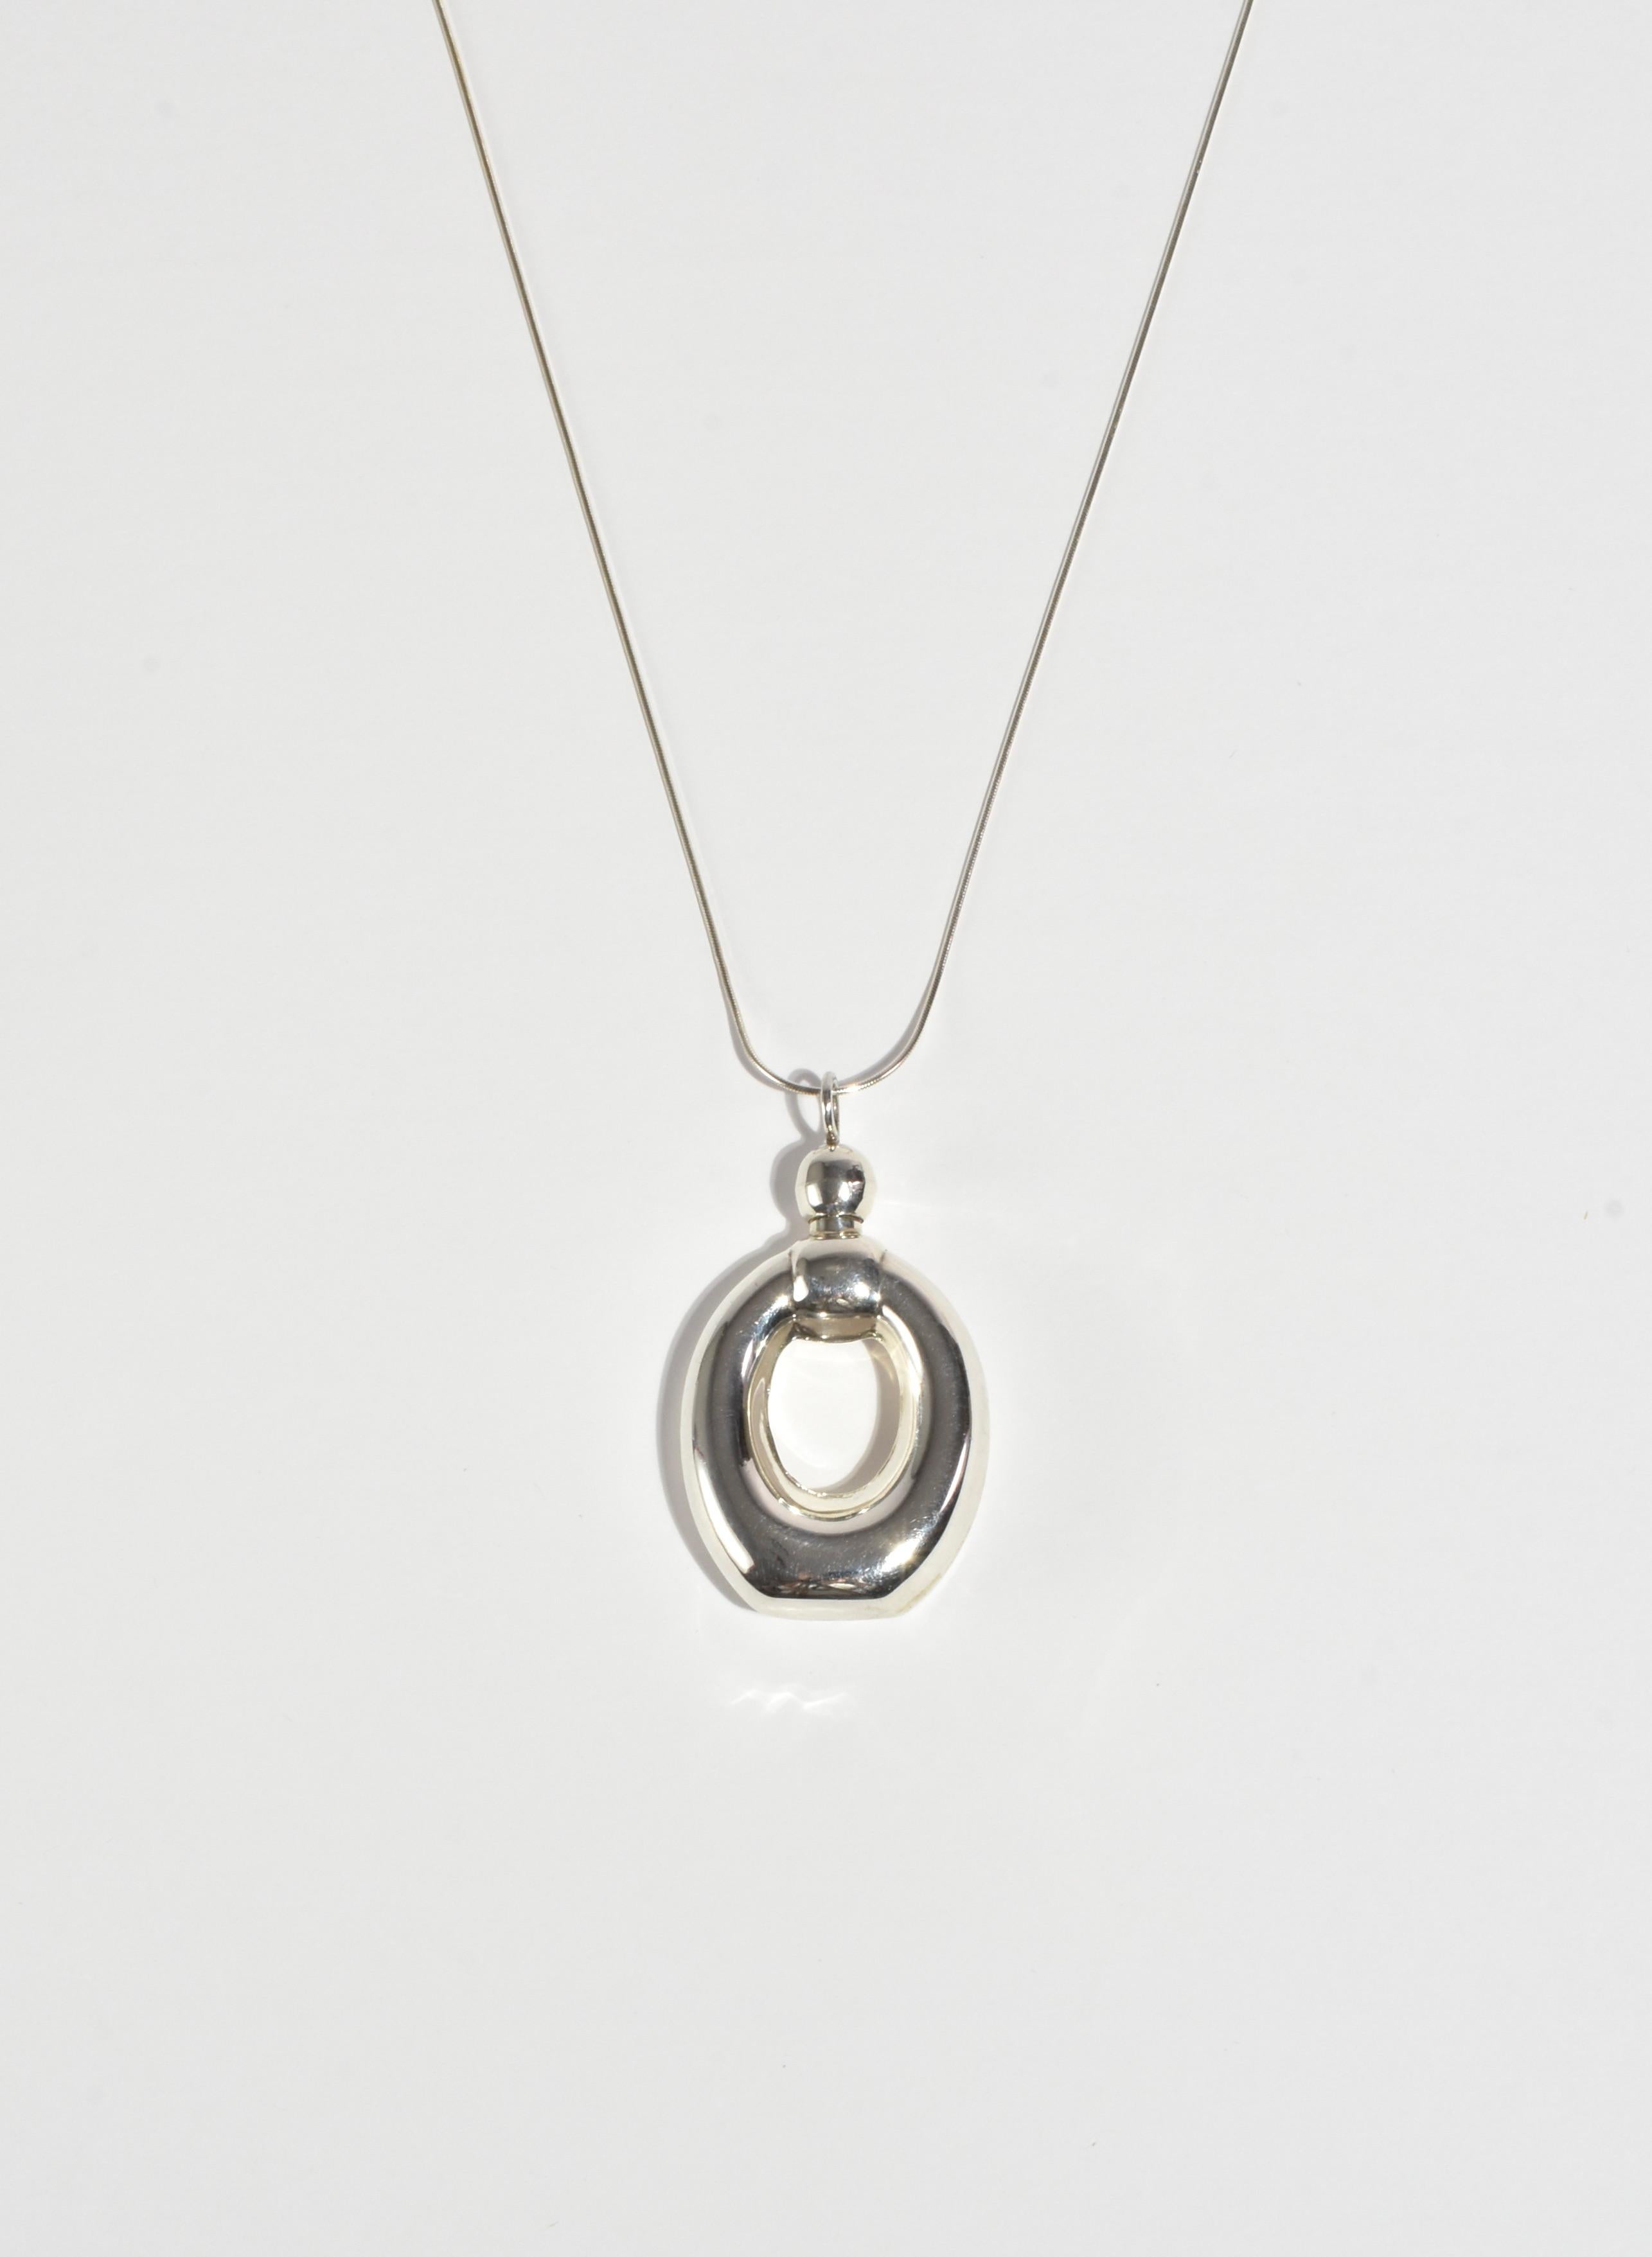 Women's or Men's Oval Perfume Bottle Pendant Necklace